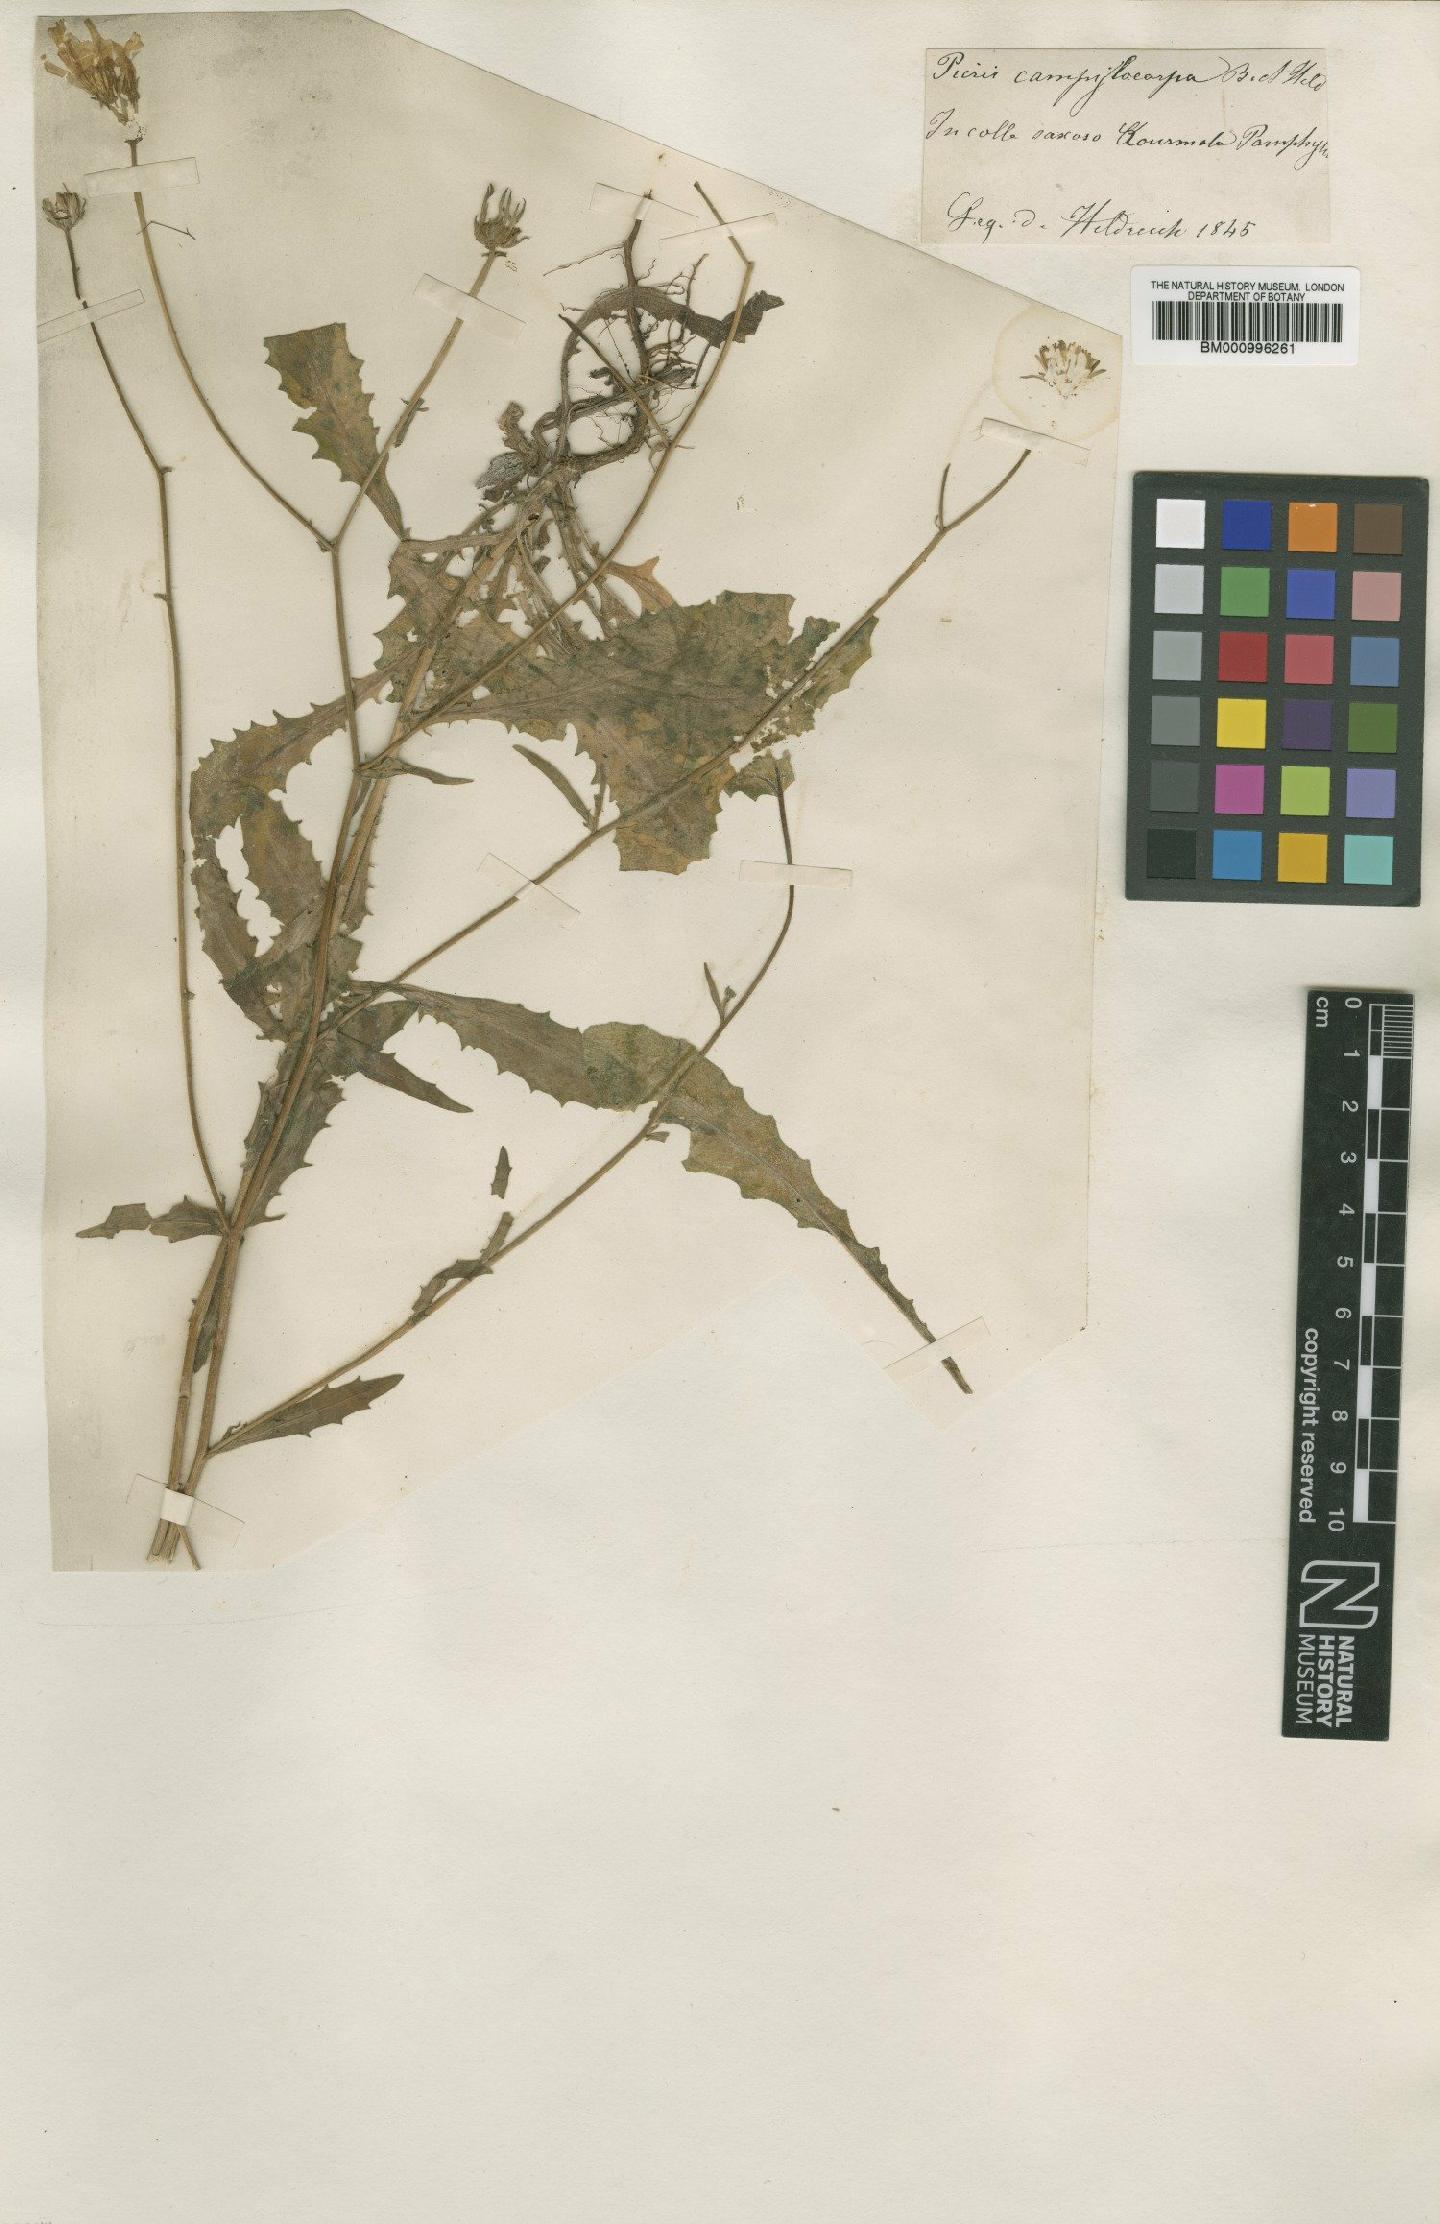 To NHMUK collection (Picris campylocarpa Boiss. & Heldr.; Type; NHMUK:ecatalogue:480877)